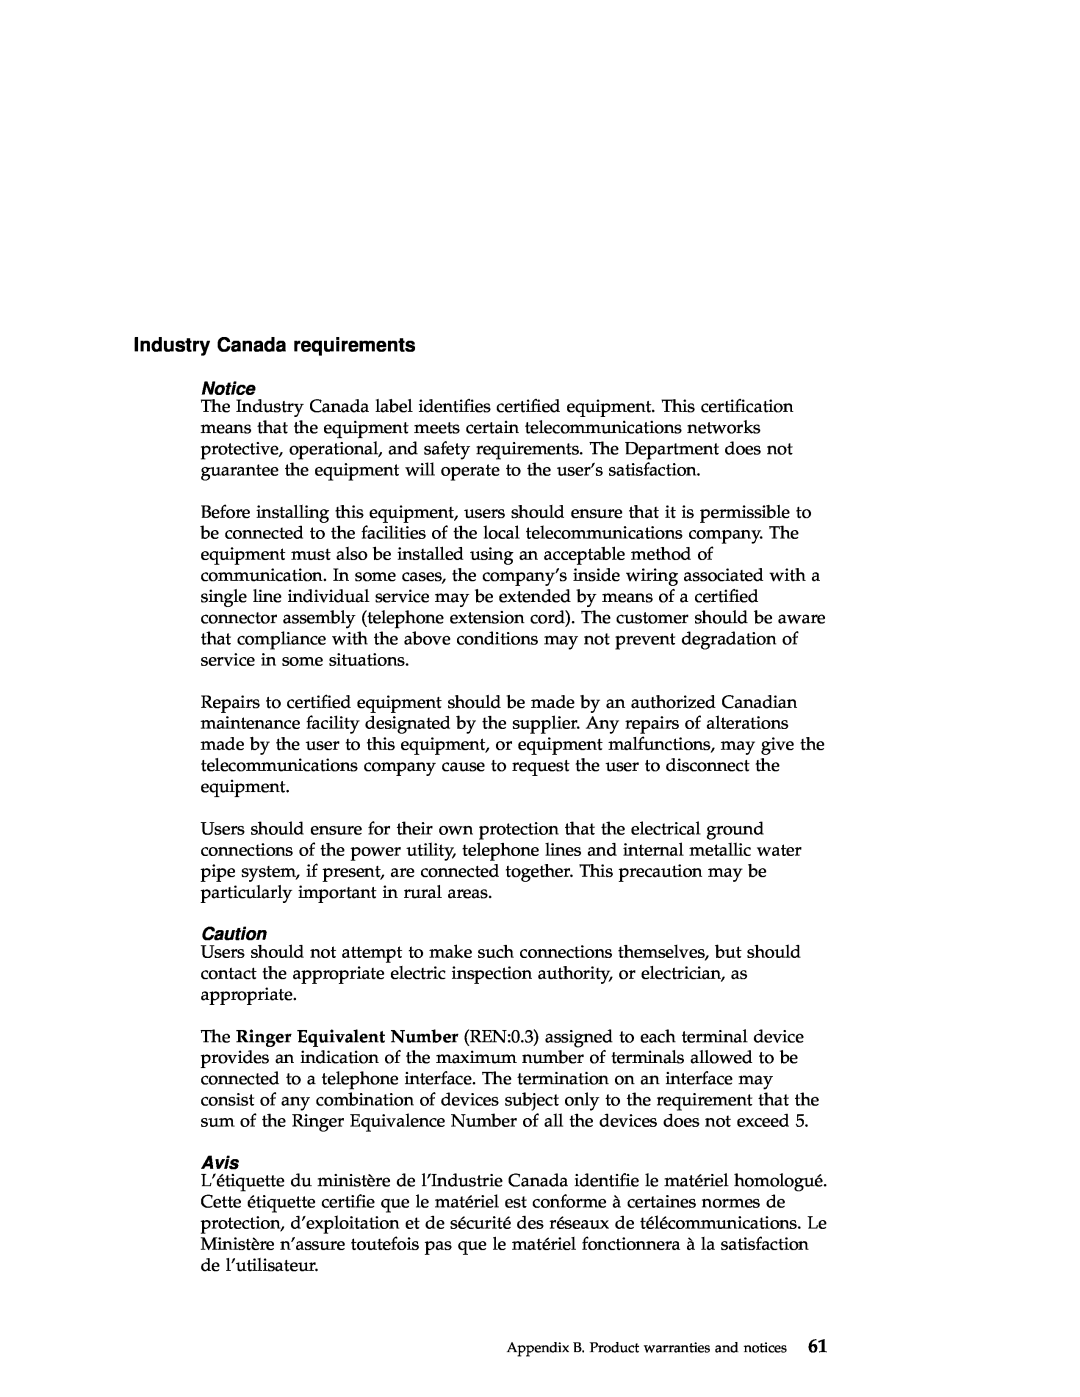 IBM A21e manual Industry Canada requirements, Avis 